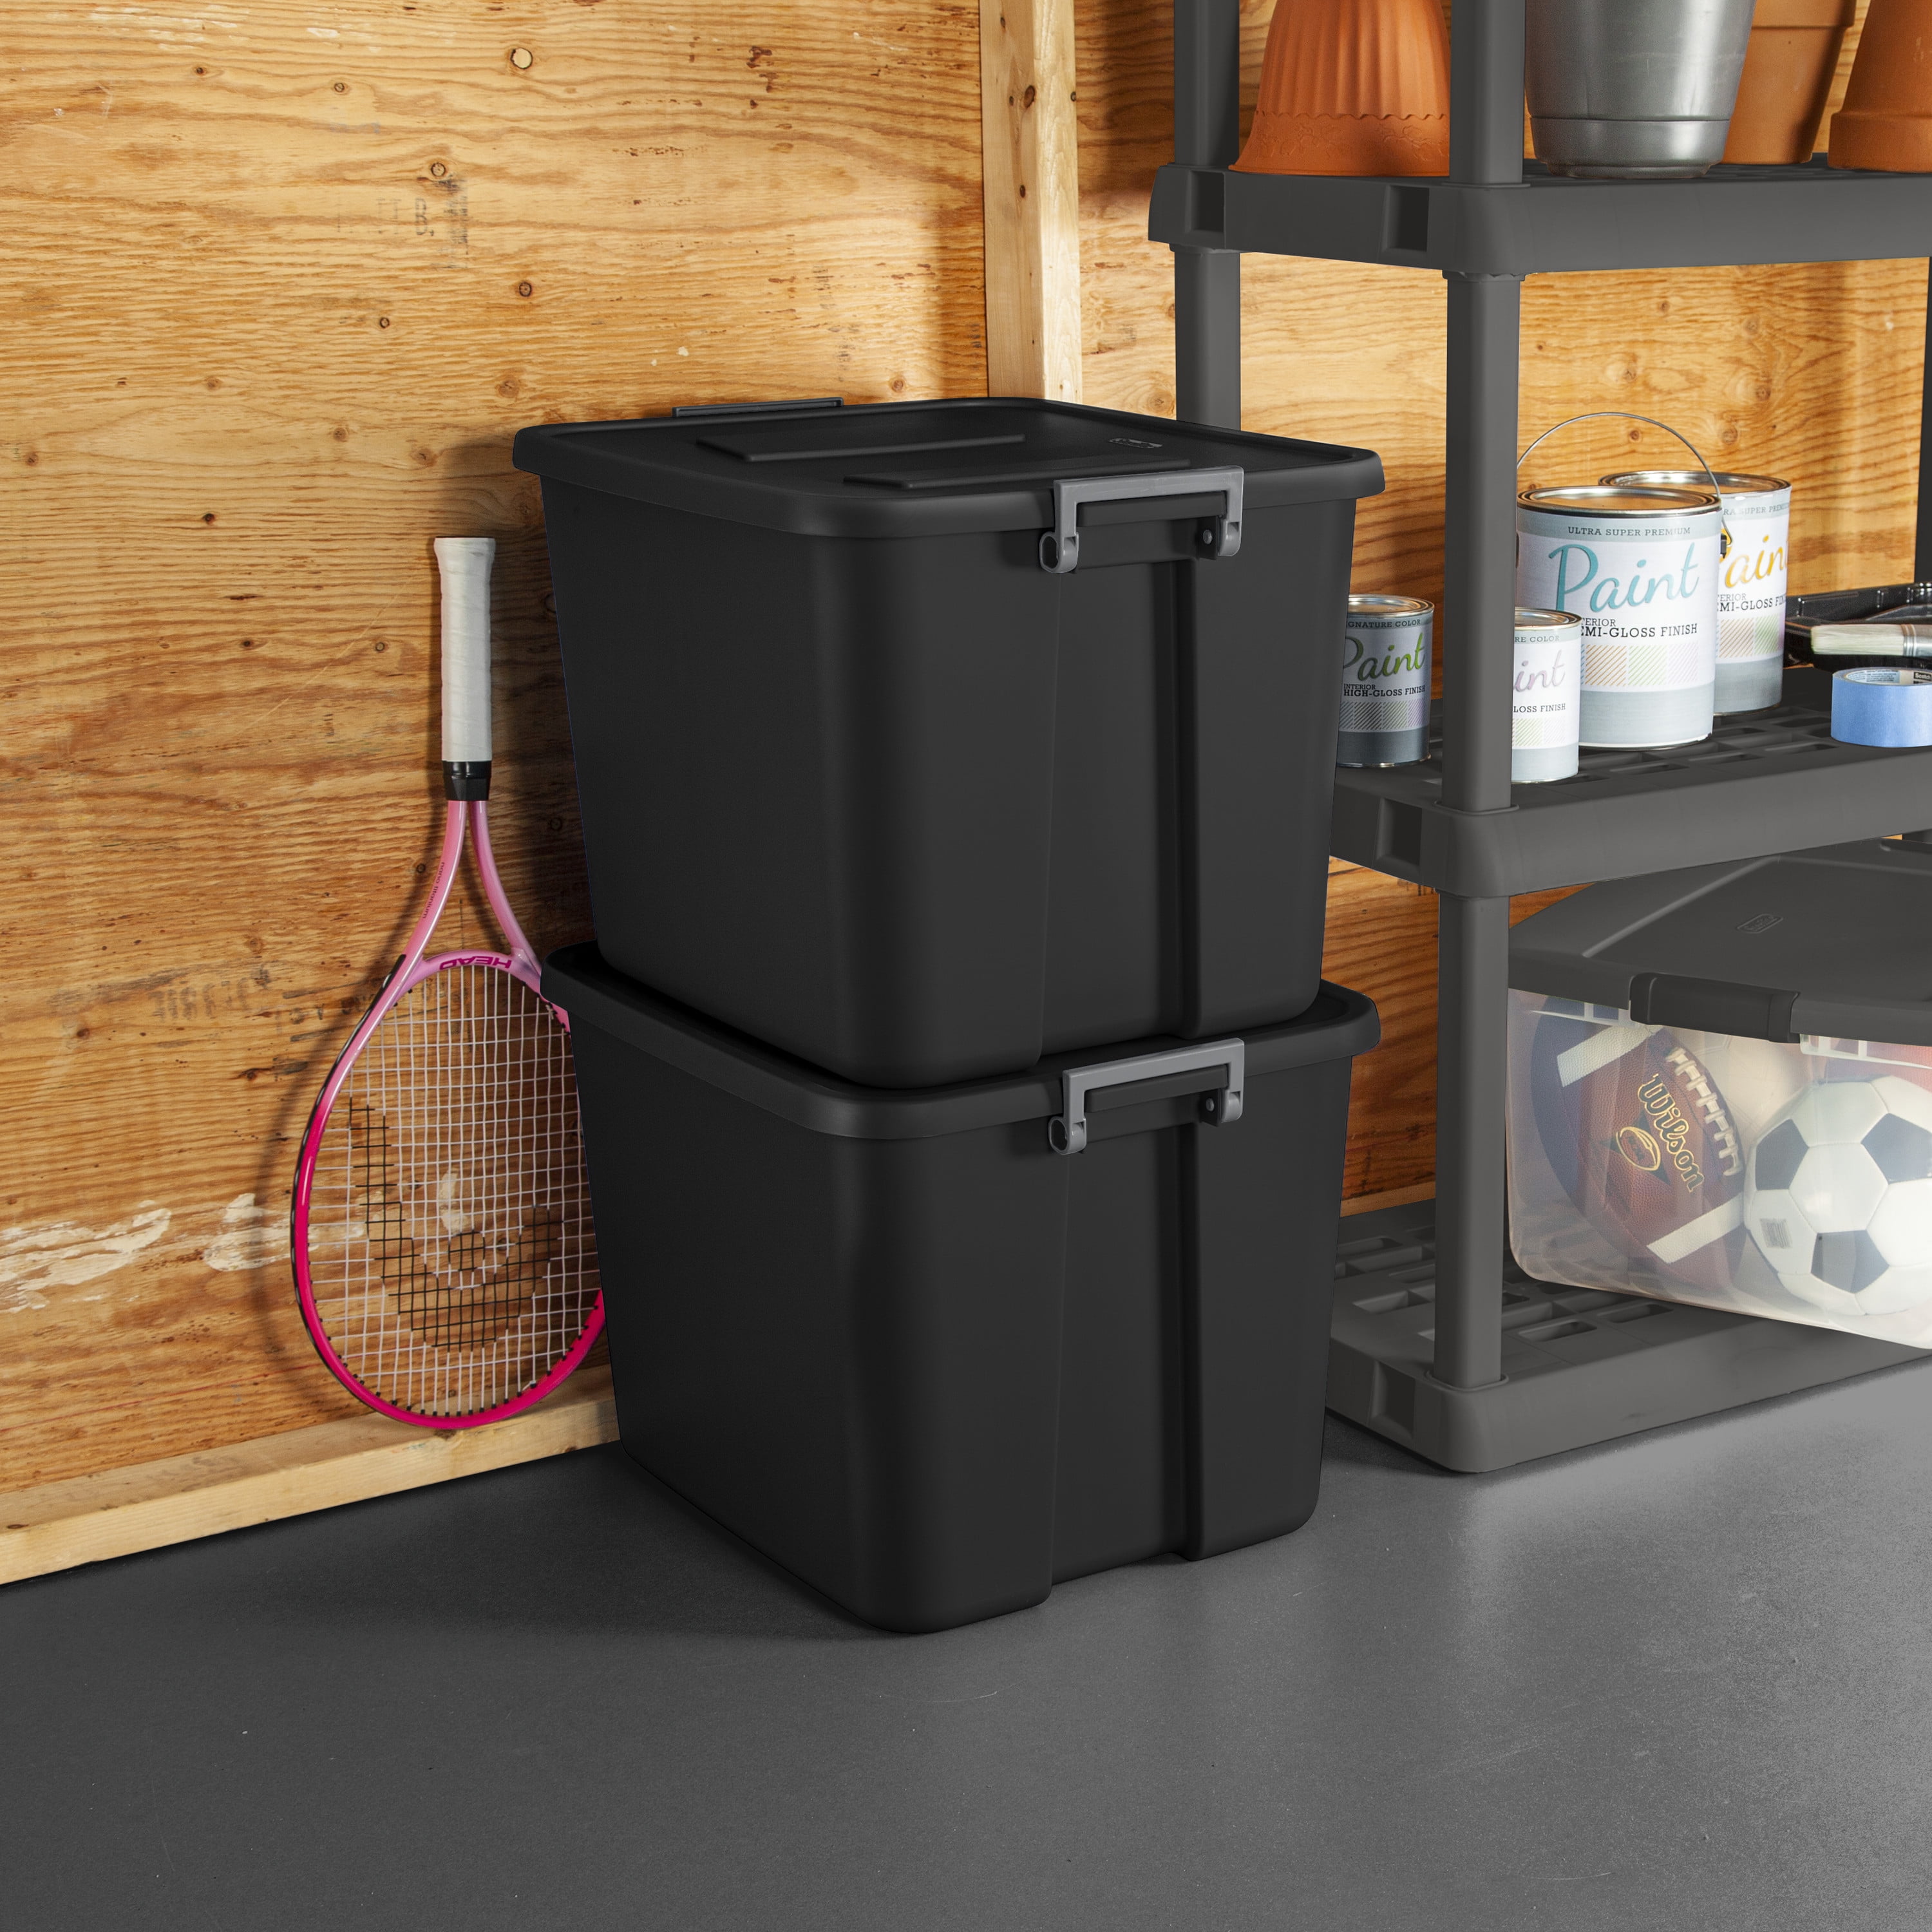 Universal Filing/Storage Tote Storage Box, Plastic, 20-1/8 x 14-5/8 x 10-3/4, Black